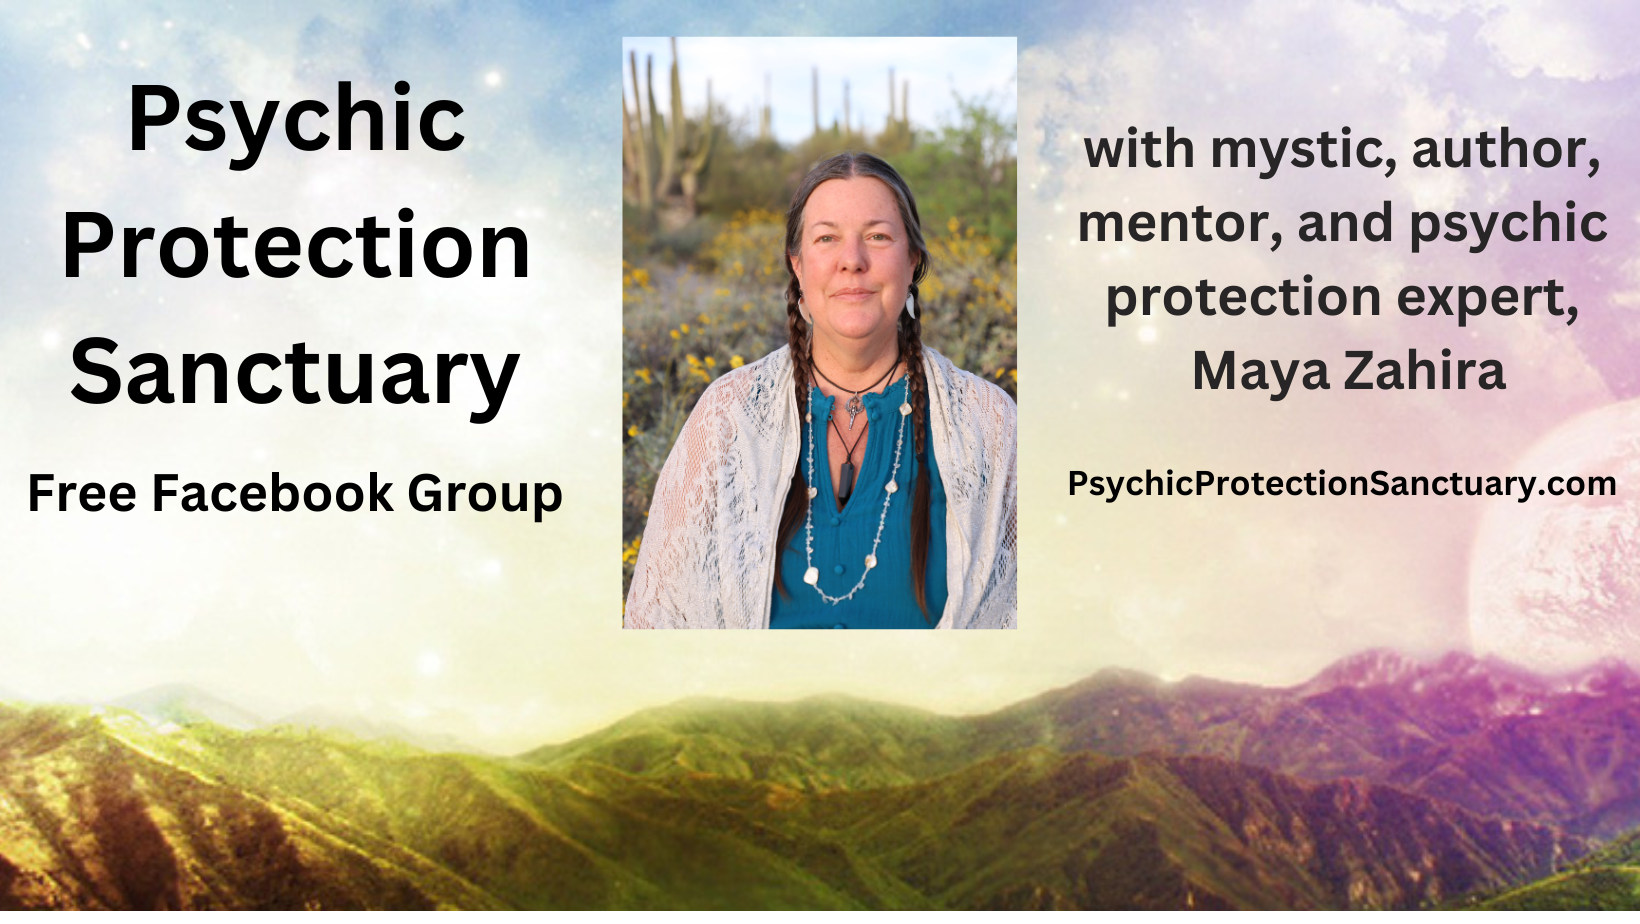 Psychic Protection Sanctuary free Facebook group with Maya Zahira